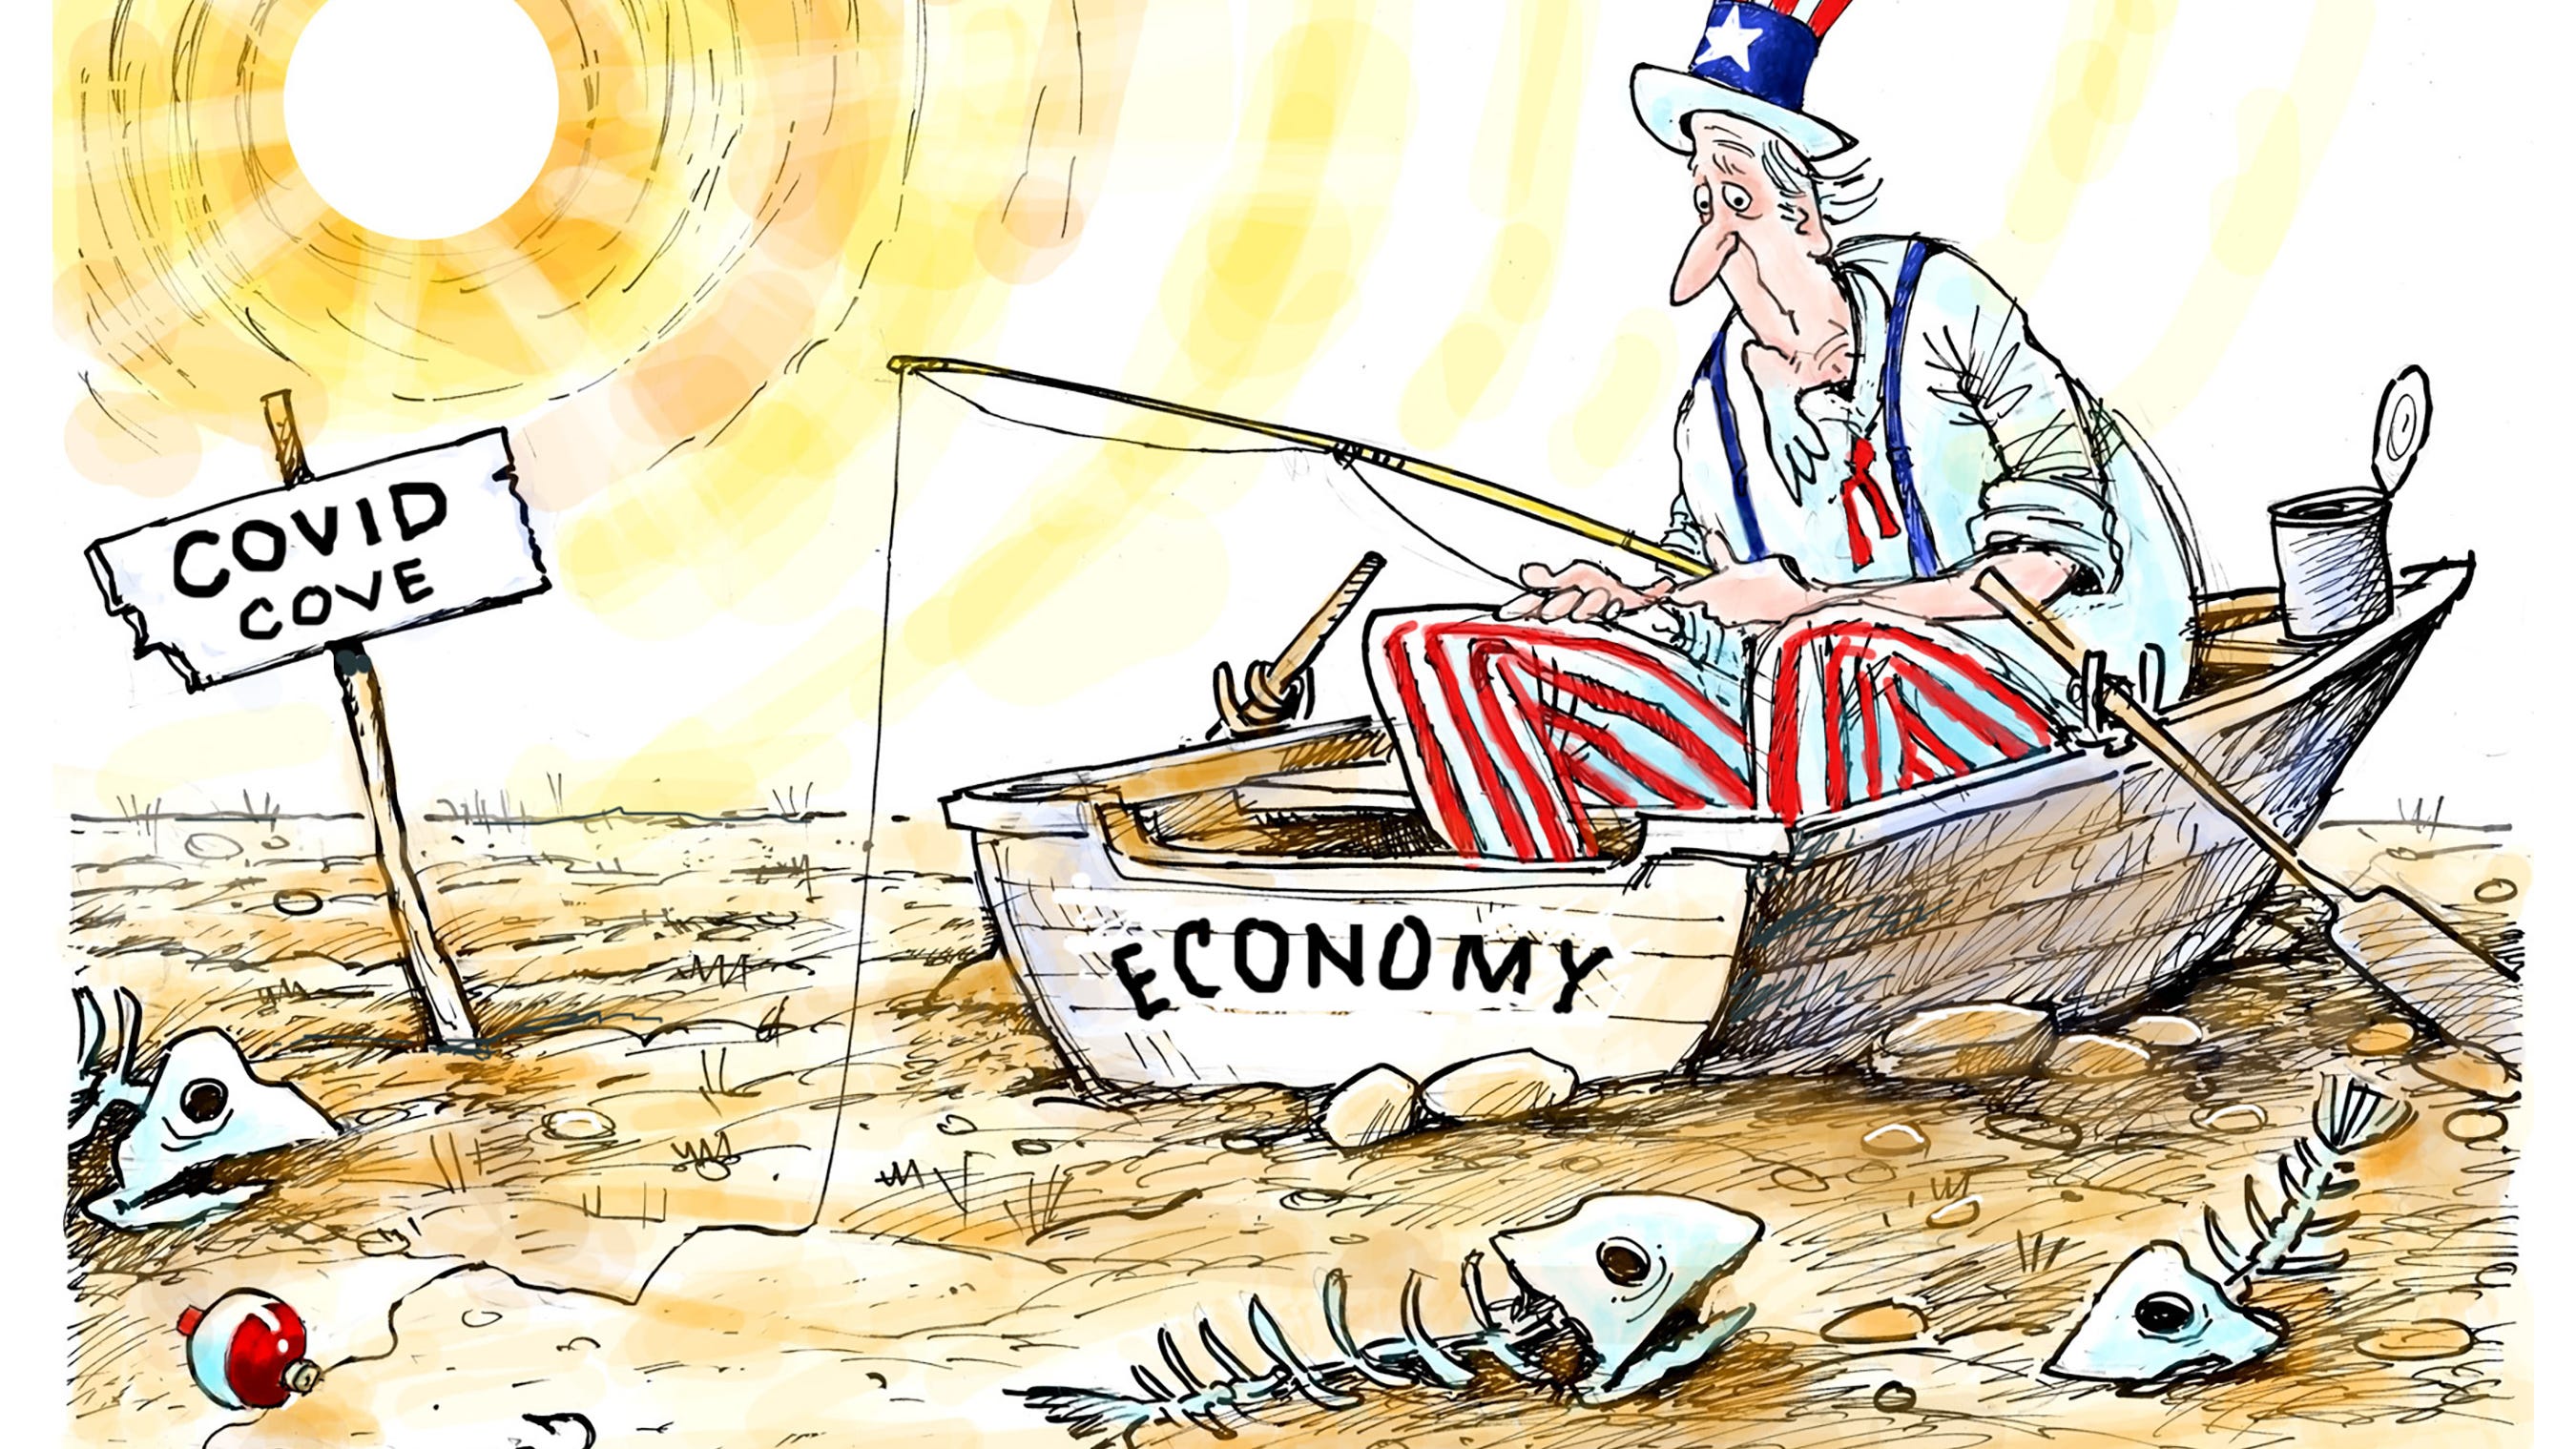 Granlund Cartoon Economy Drought